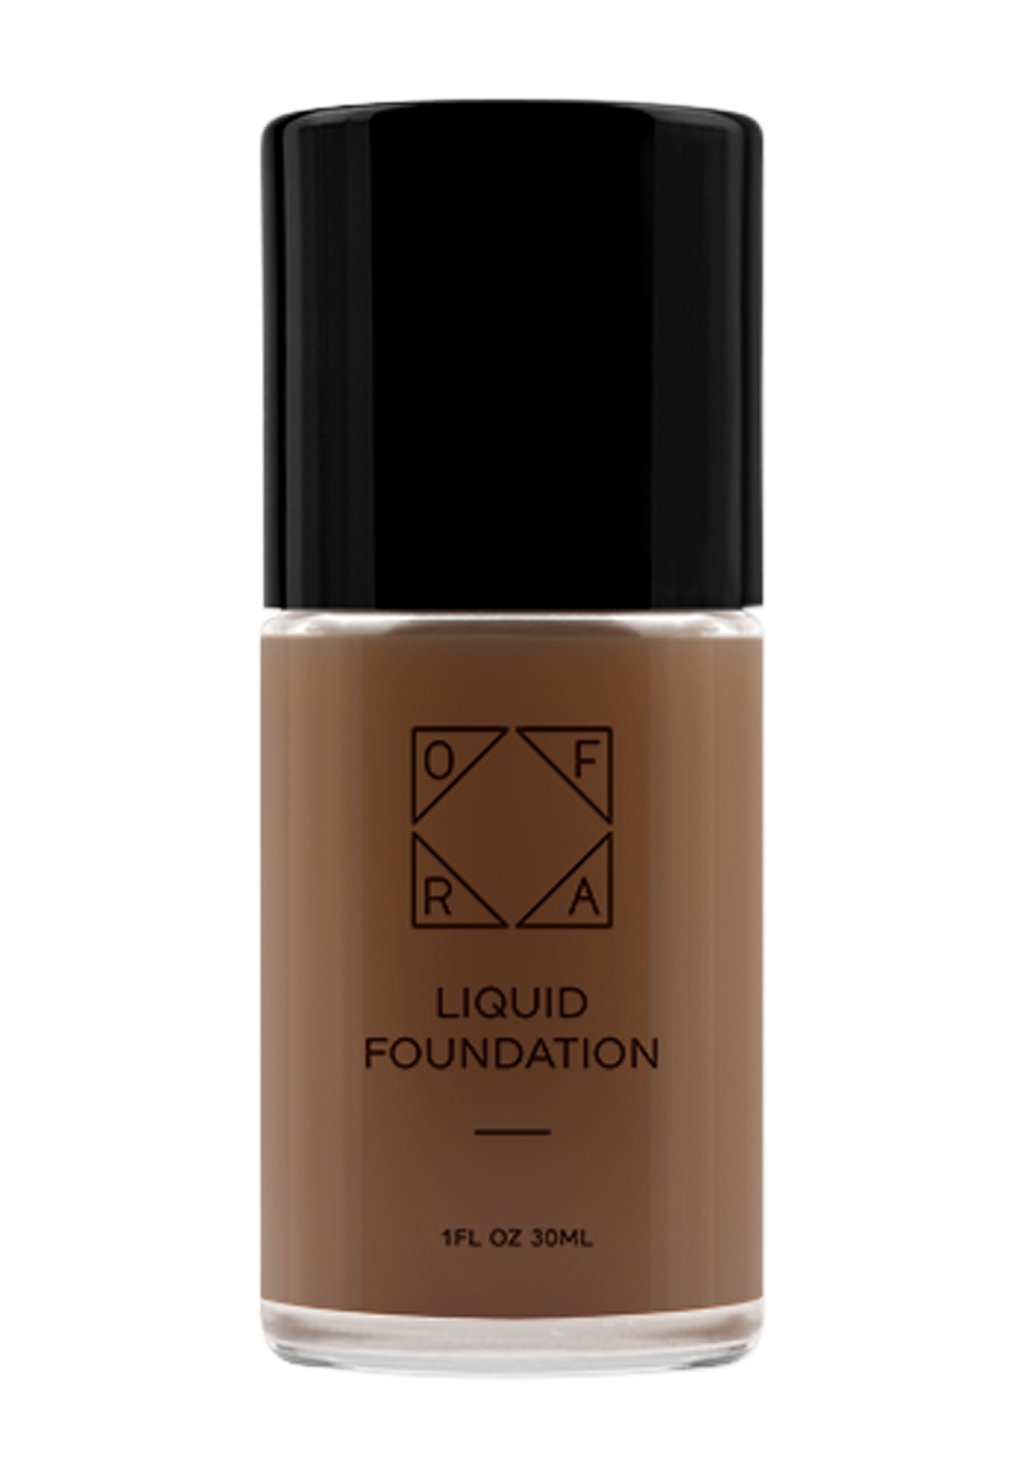 huda foundation toffee 420g Тональная основа LIQUID FOUNDATION OFRA, цвет toffee